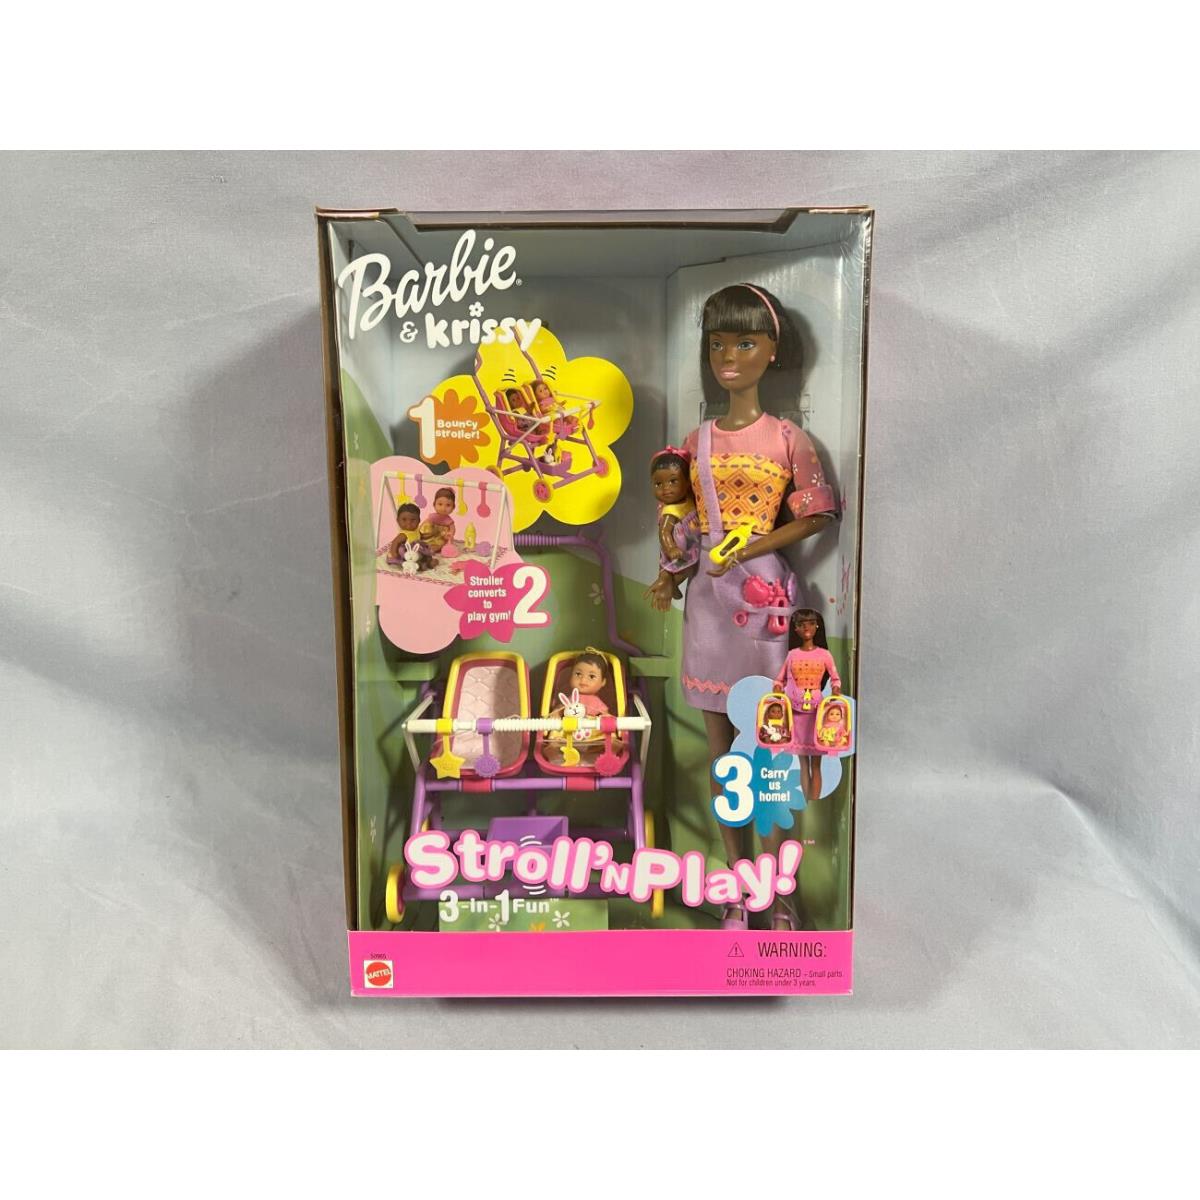 Barbie Krissy Stroll N Play 2001 Mattel 50965 African American Nrfb